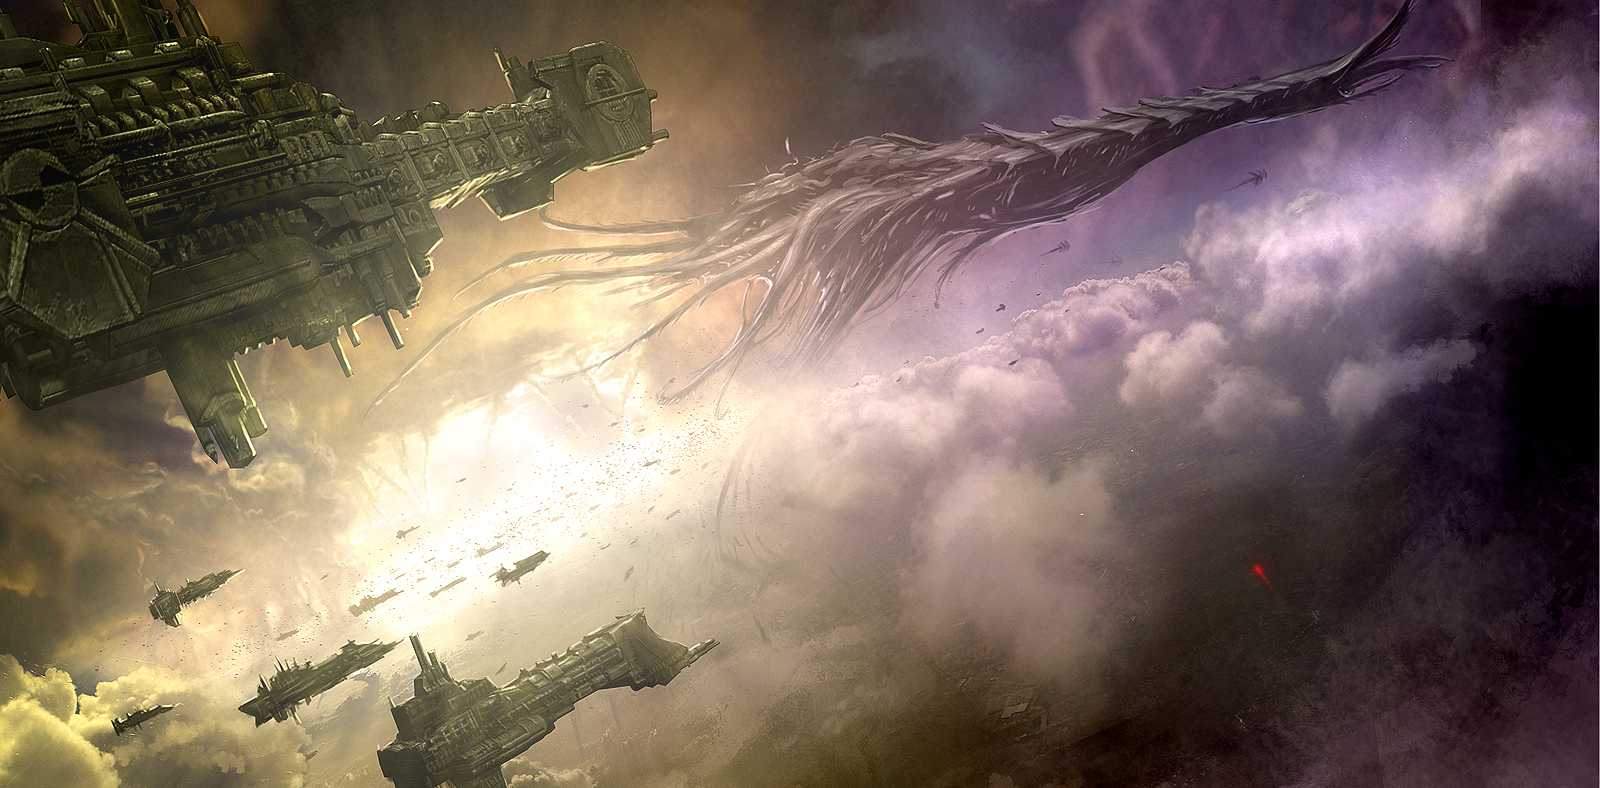 Space image - Warhammer 40k Tyranids Group.